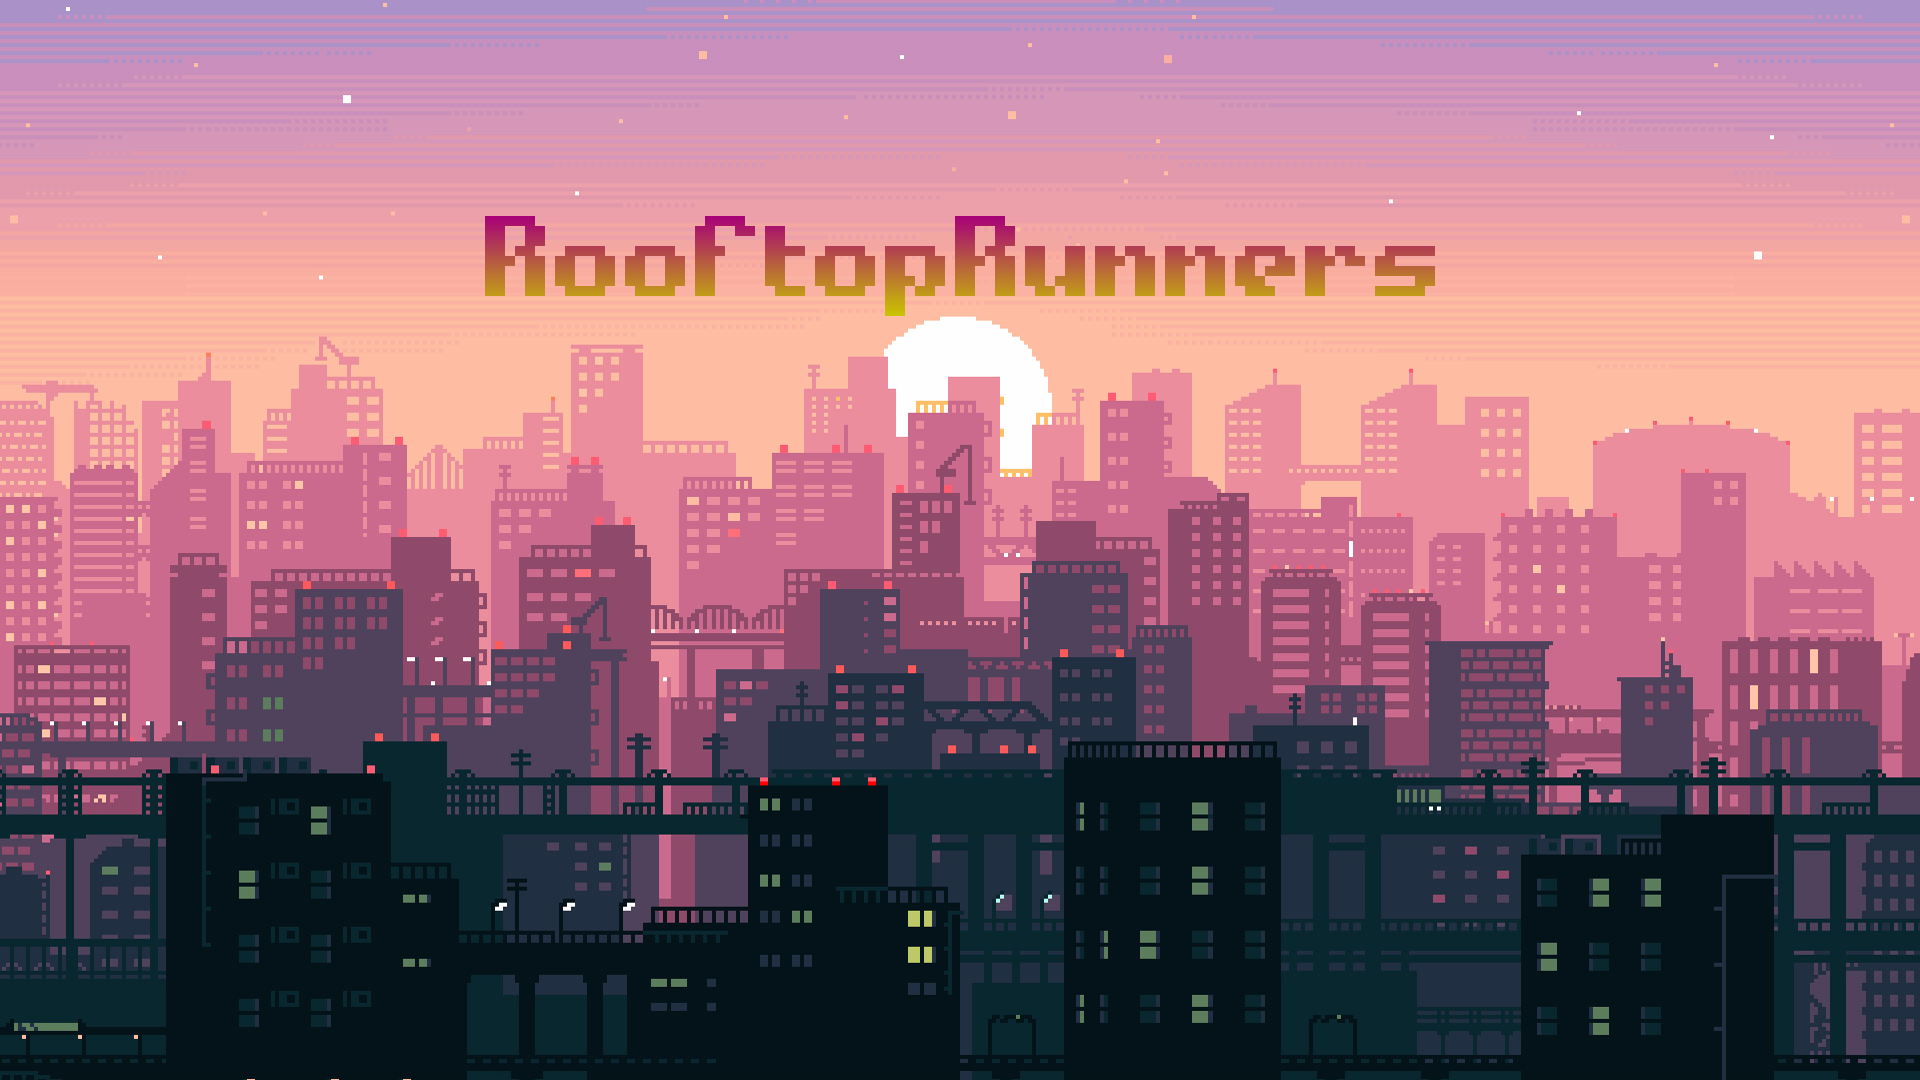 RooftopRunners